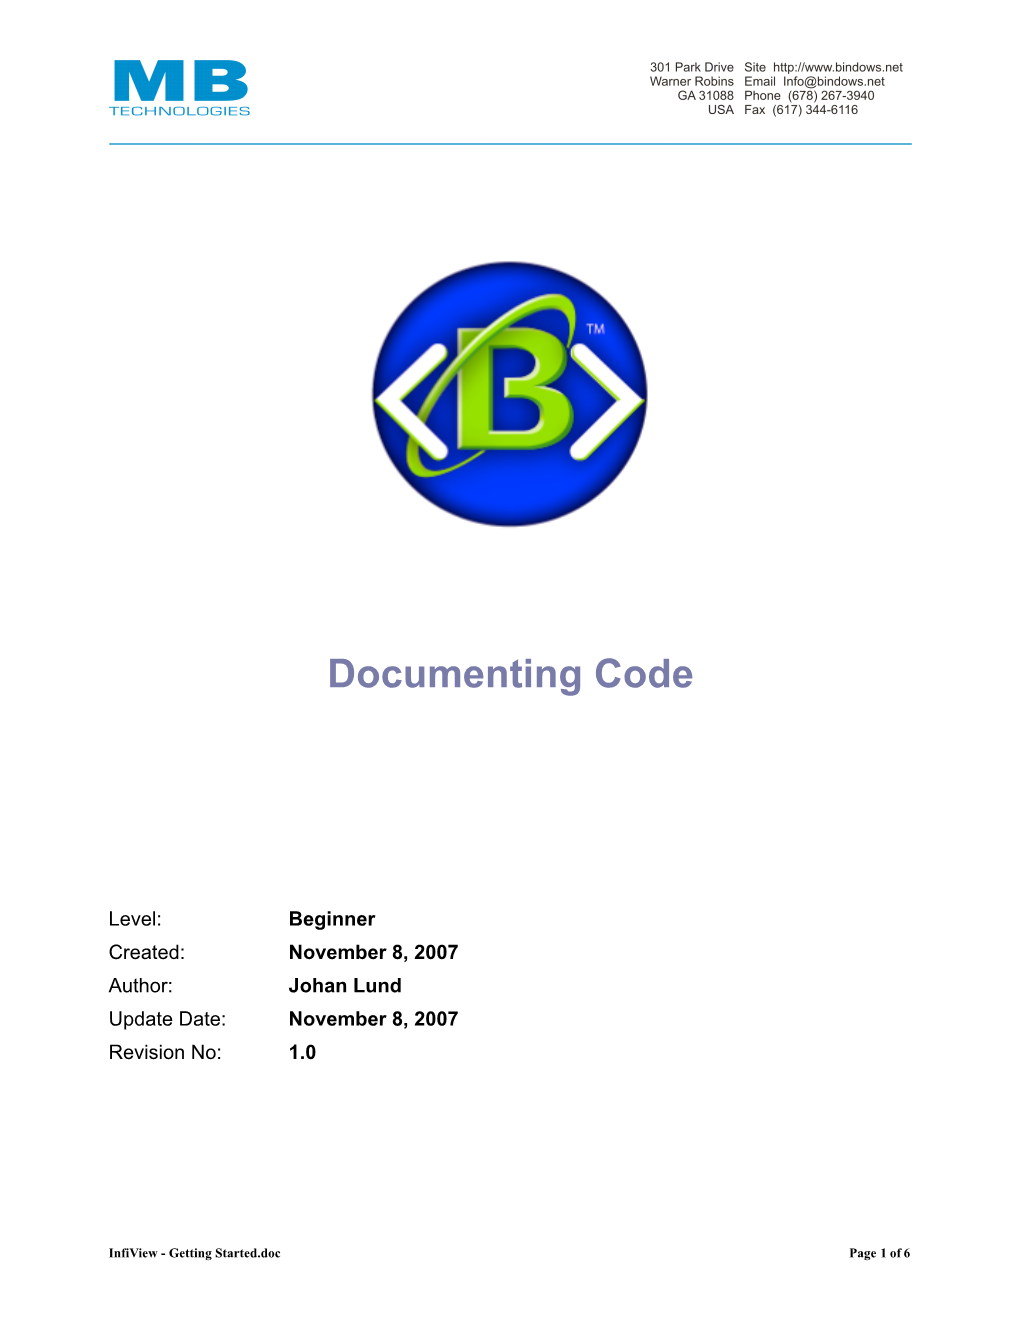 Documenting Code